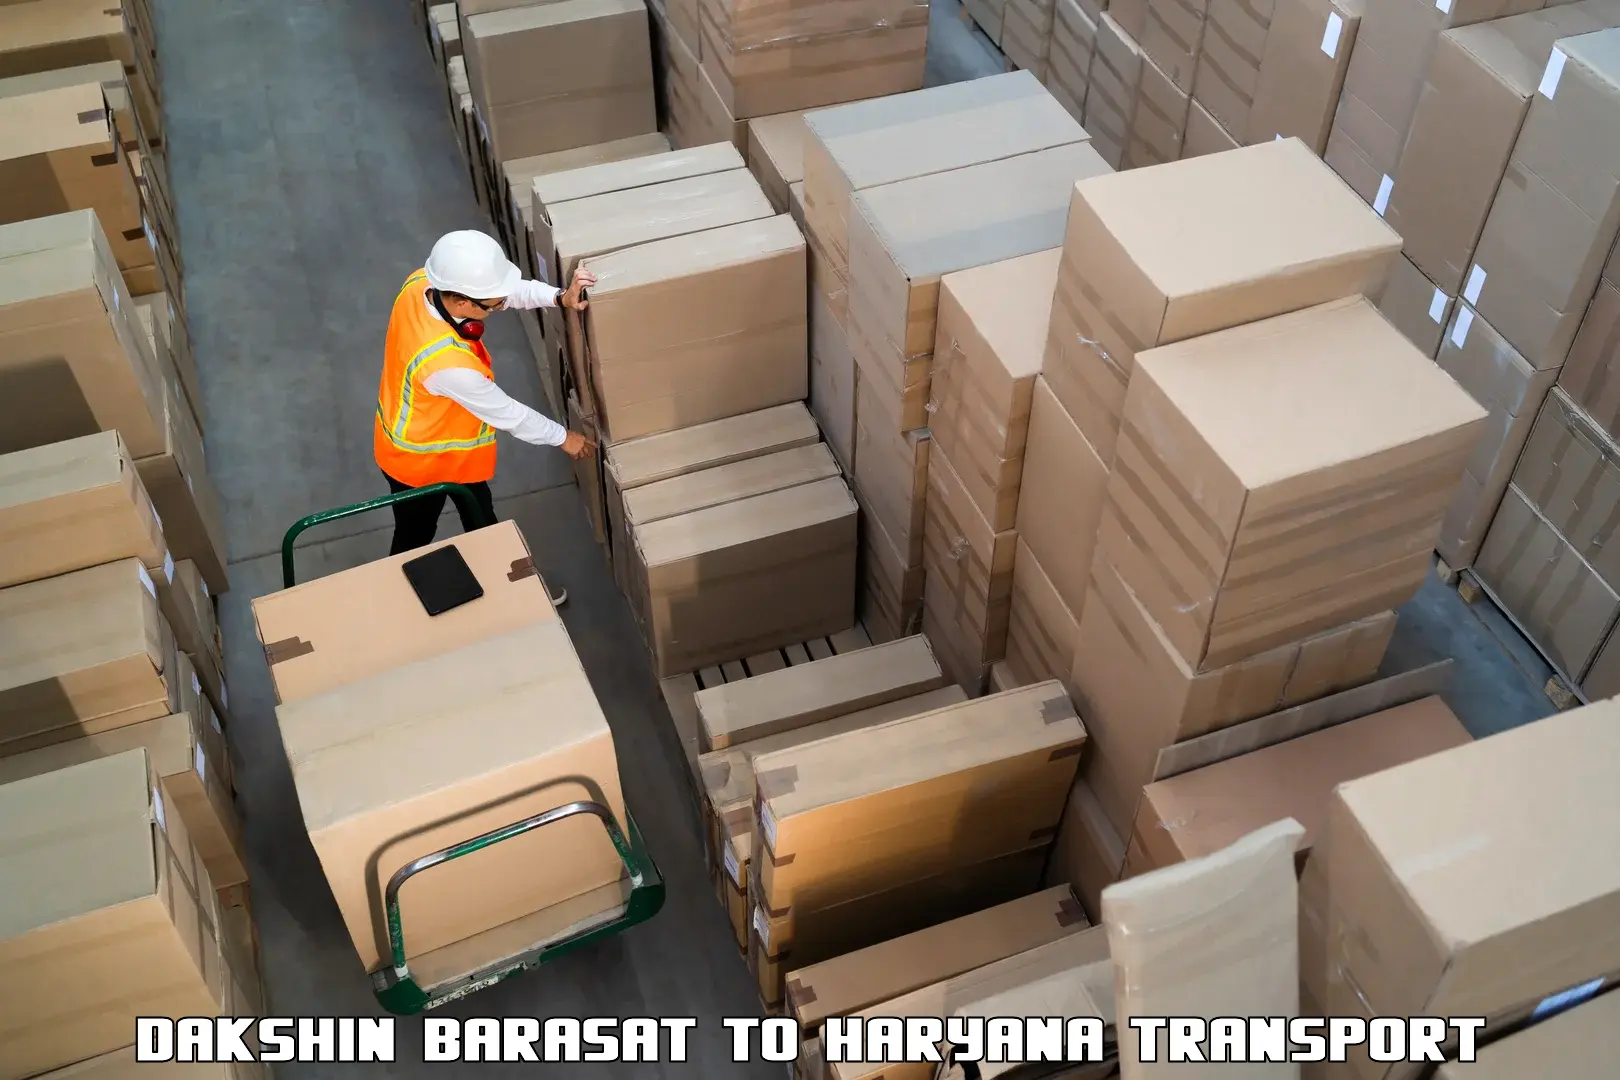 Two wheeler parcel service Dakshin Barasat to Ambala